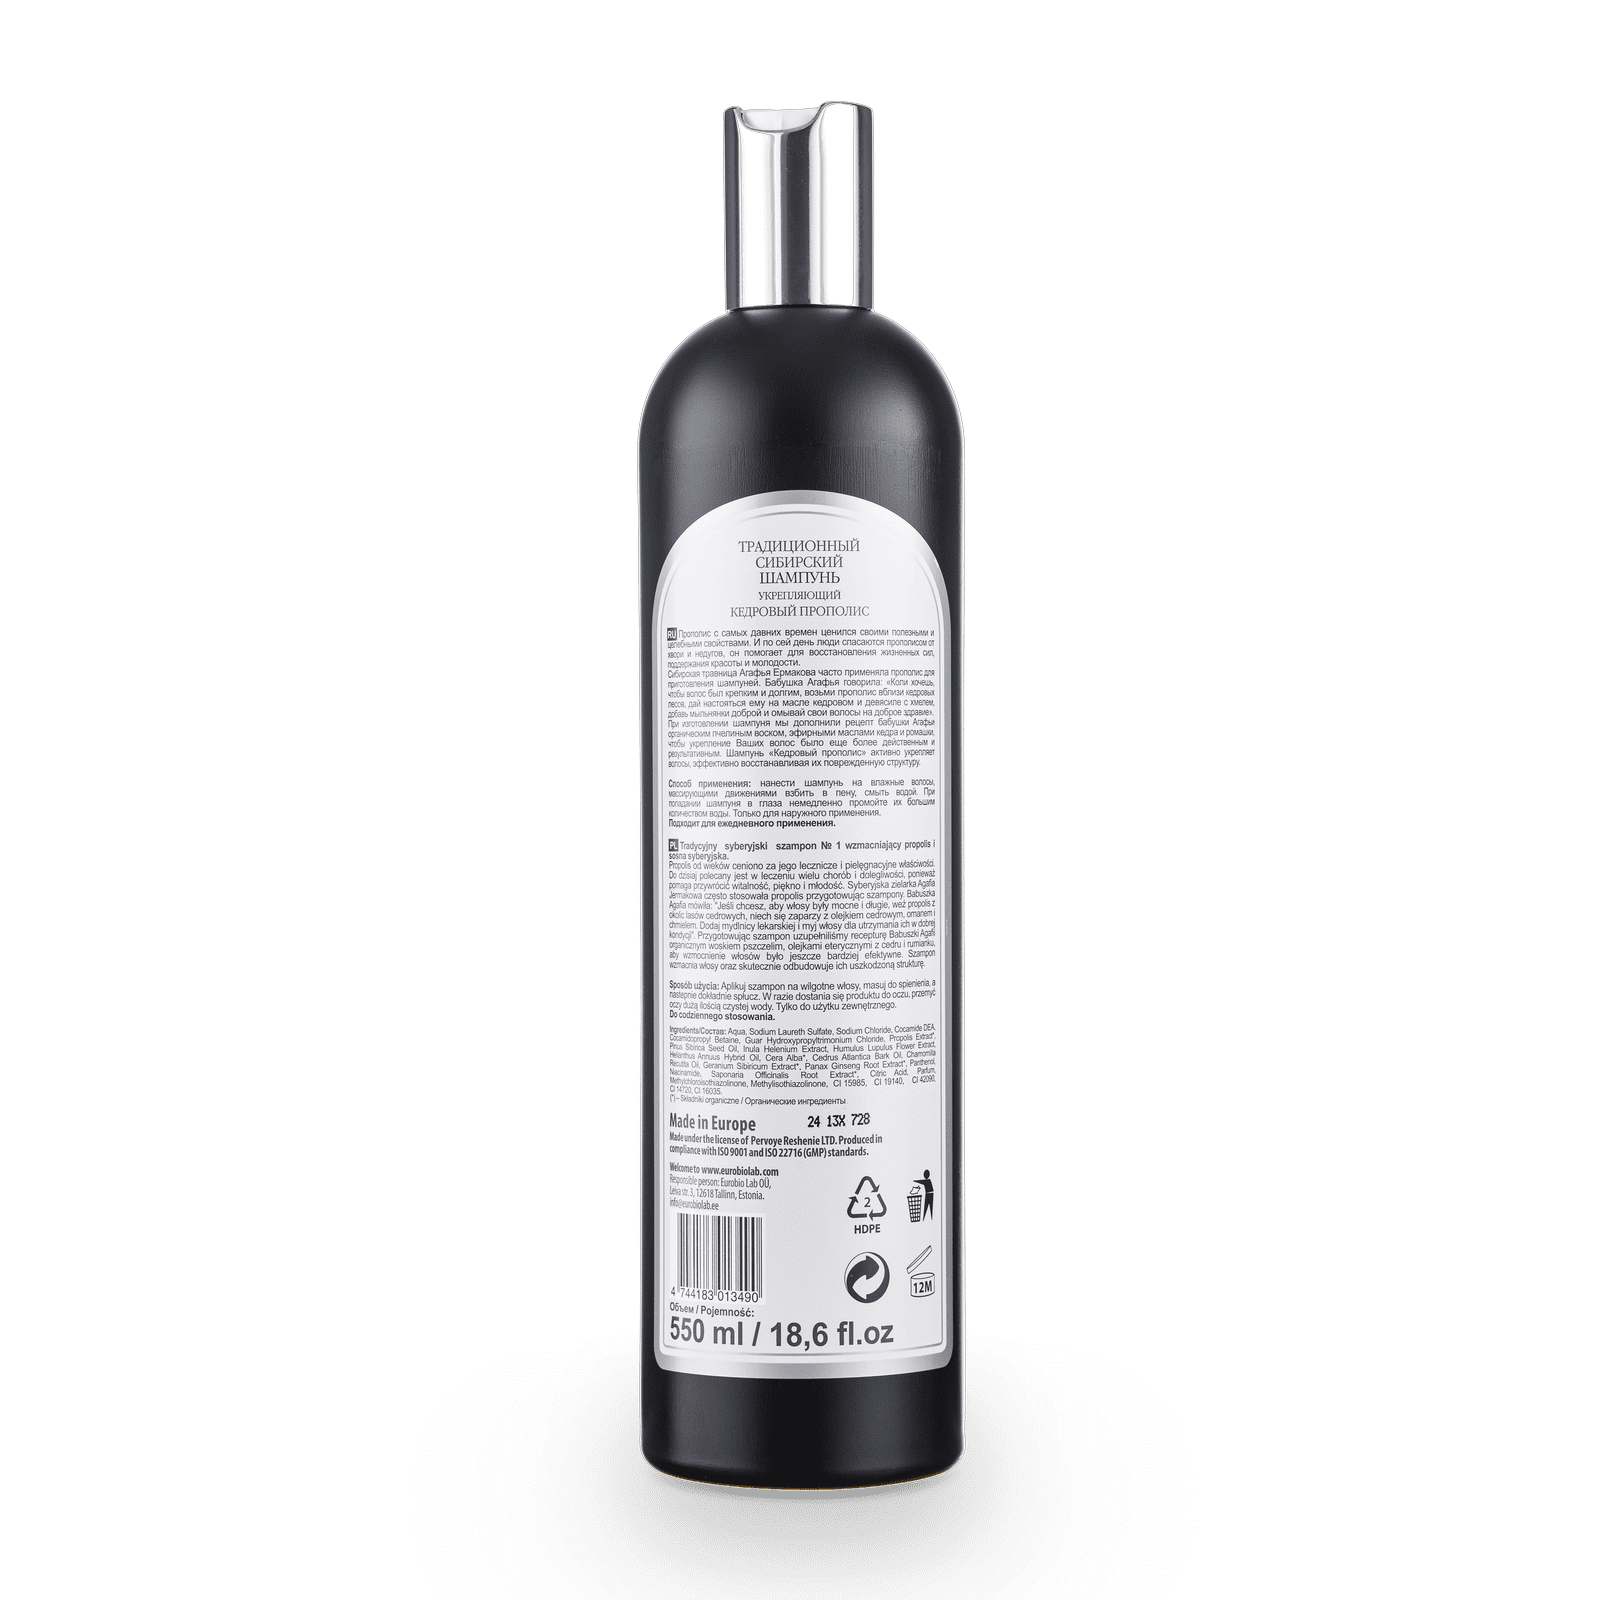 agafii syberyjski szampon nr 1 cedrowy propolis produkcja rosyjska 600ml